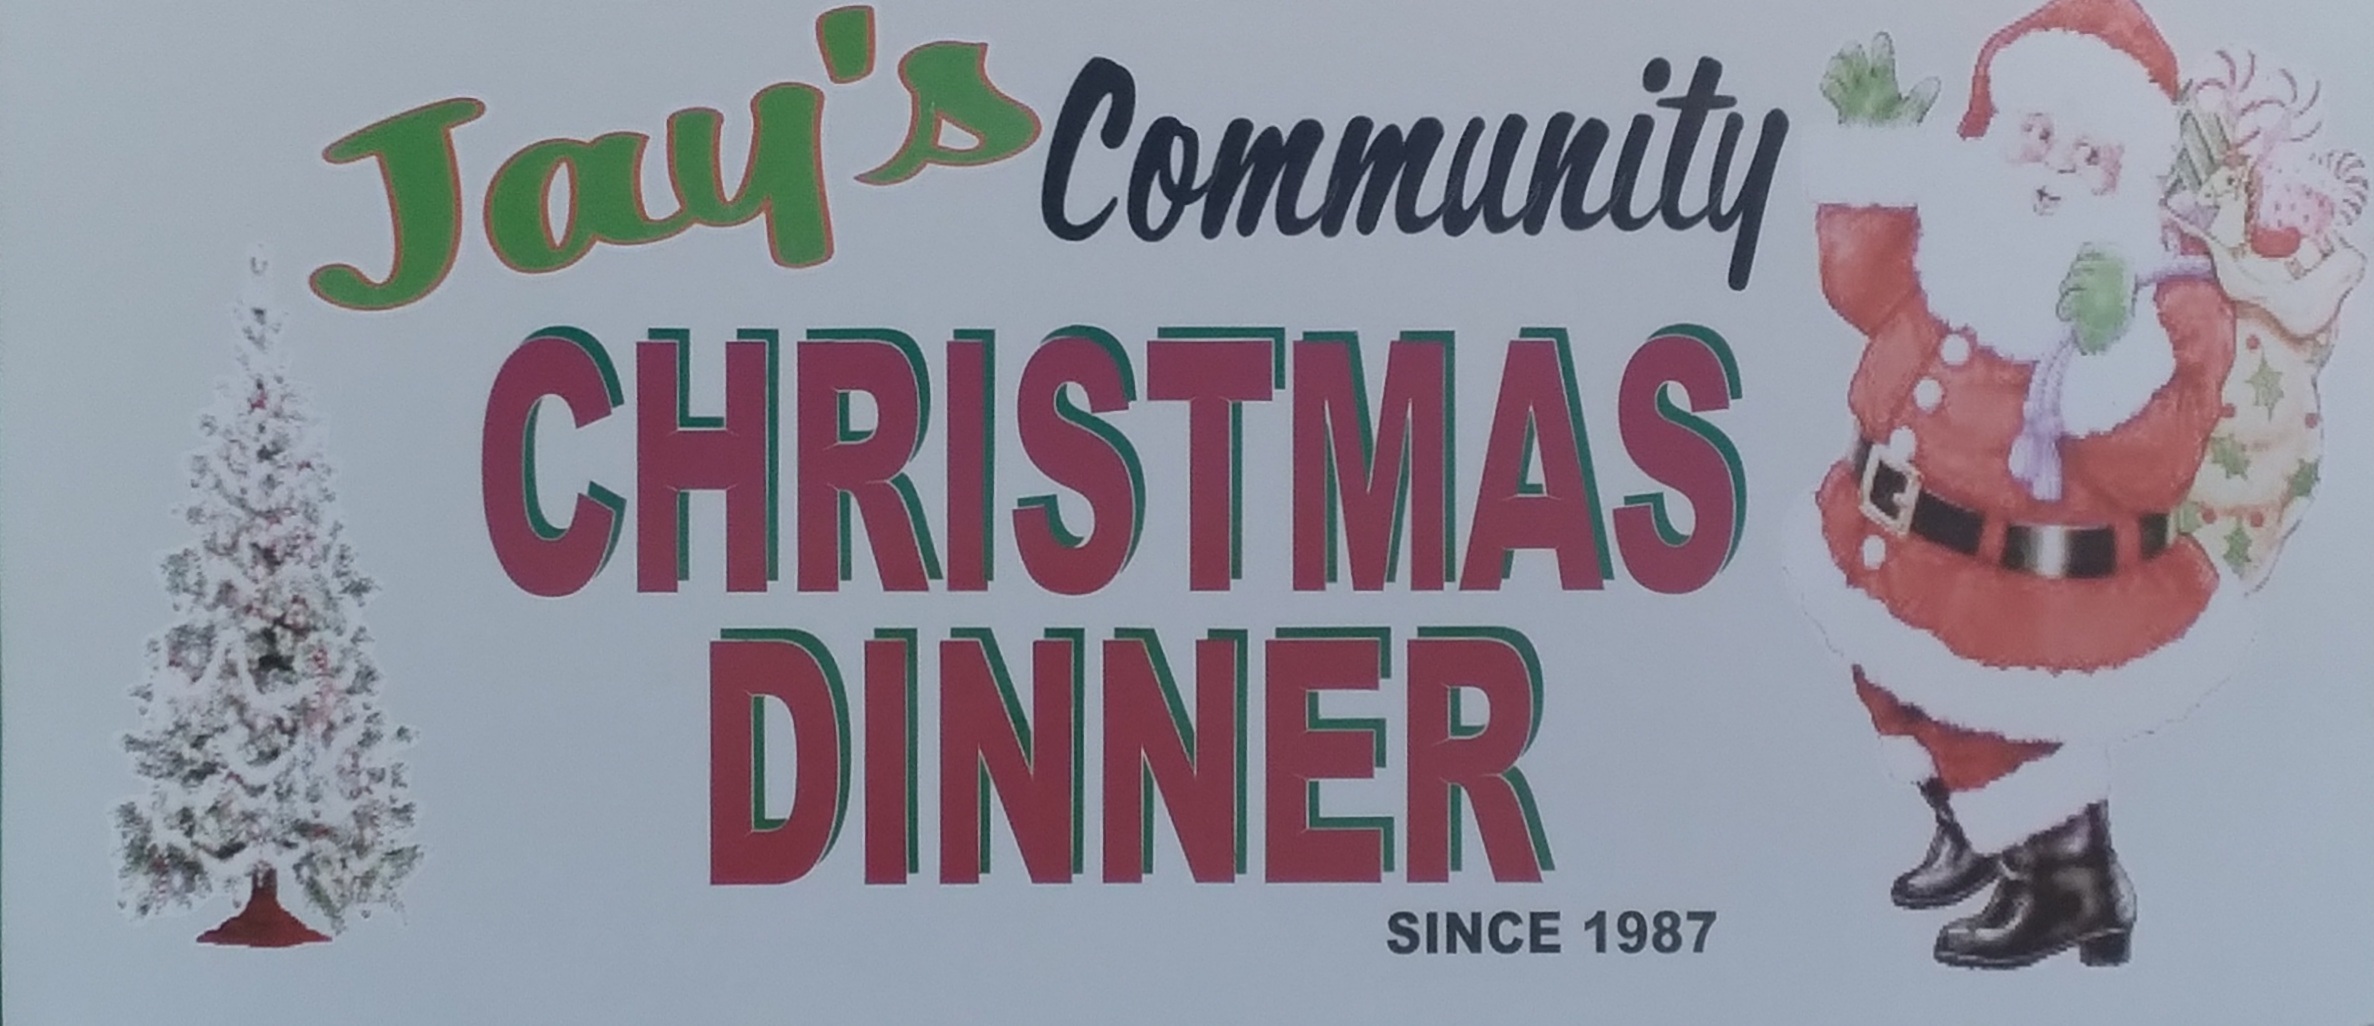 Jays Community Christmas Dinner 